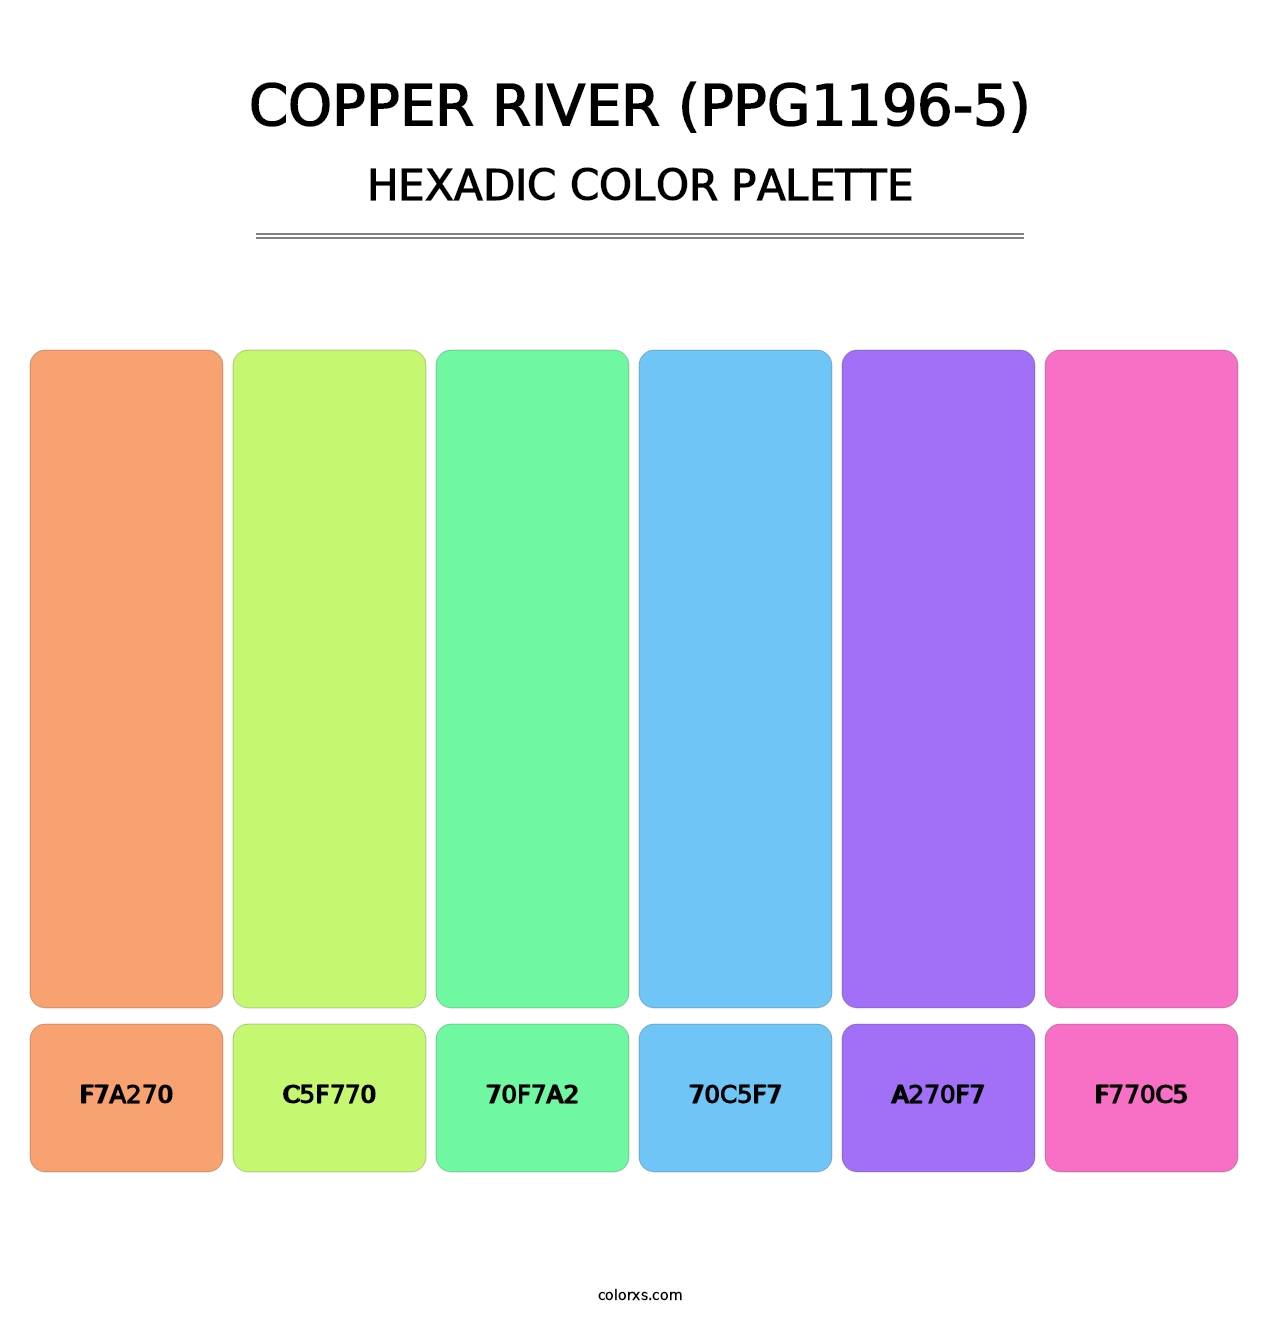 Copper River (PPG1196-5) - Hexadic Color Palette